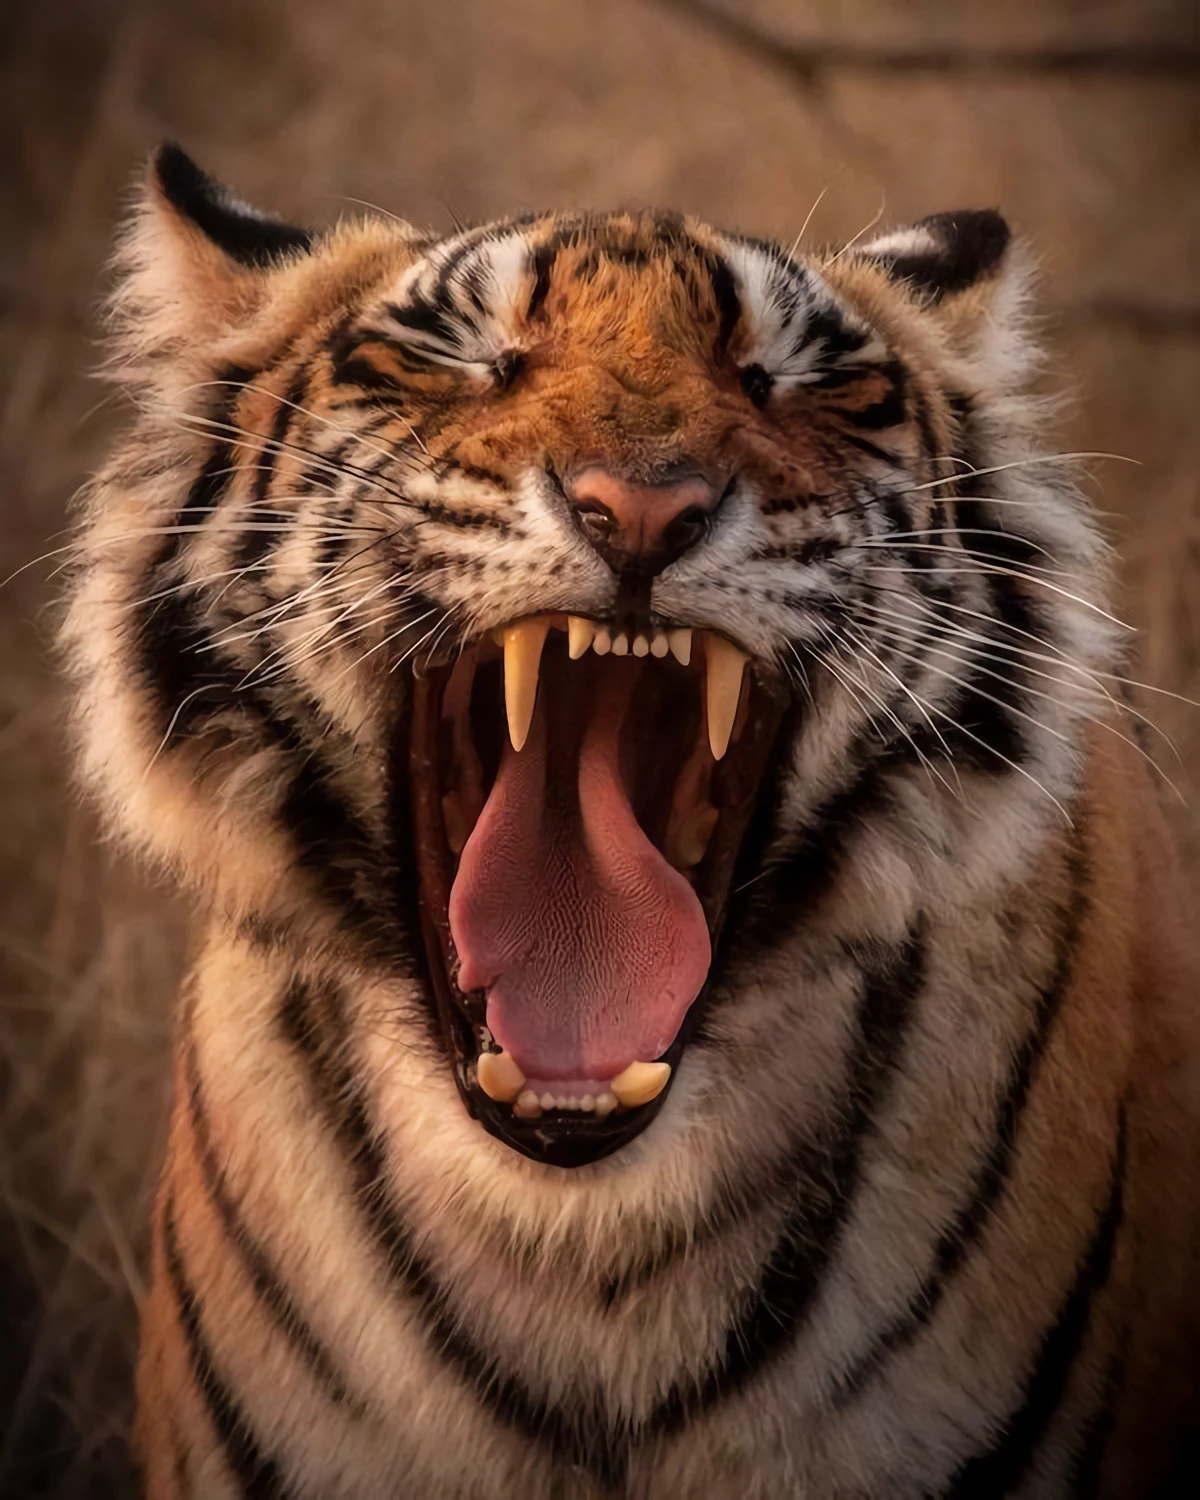 tiger yawning up close